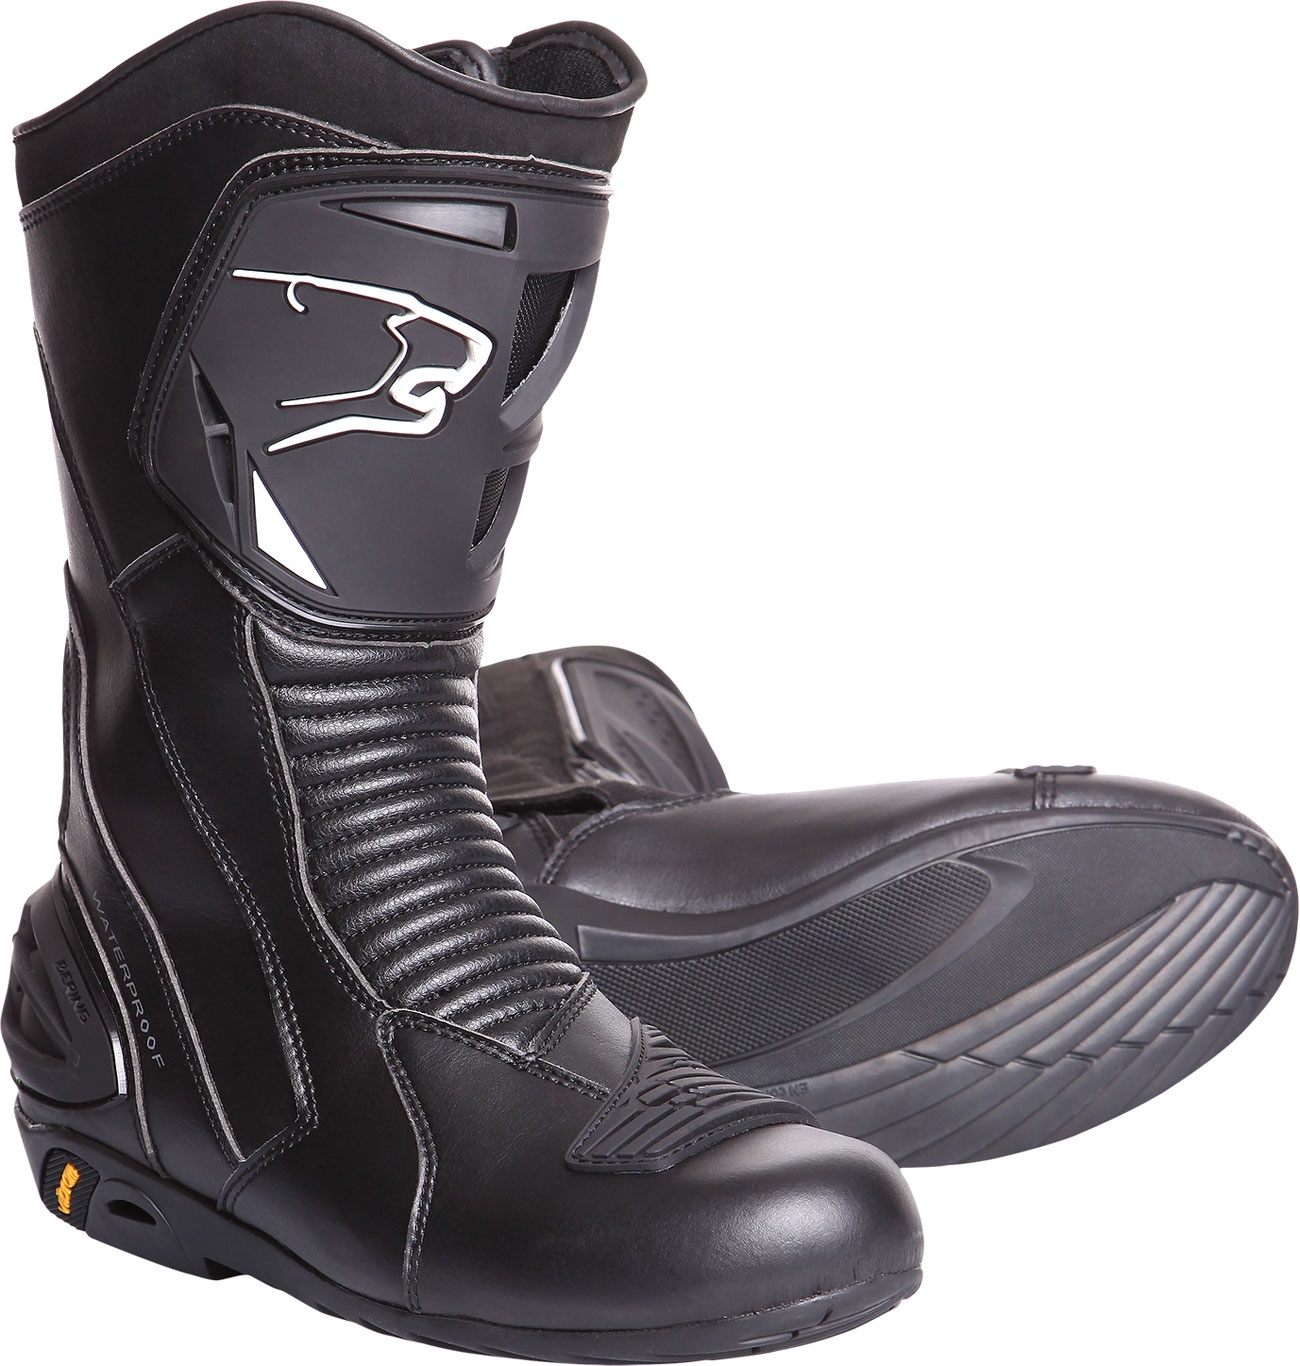 Bering X-Road, boots - Noir - T42